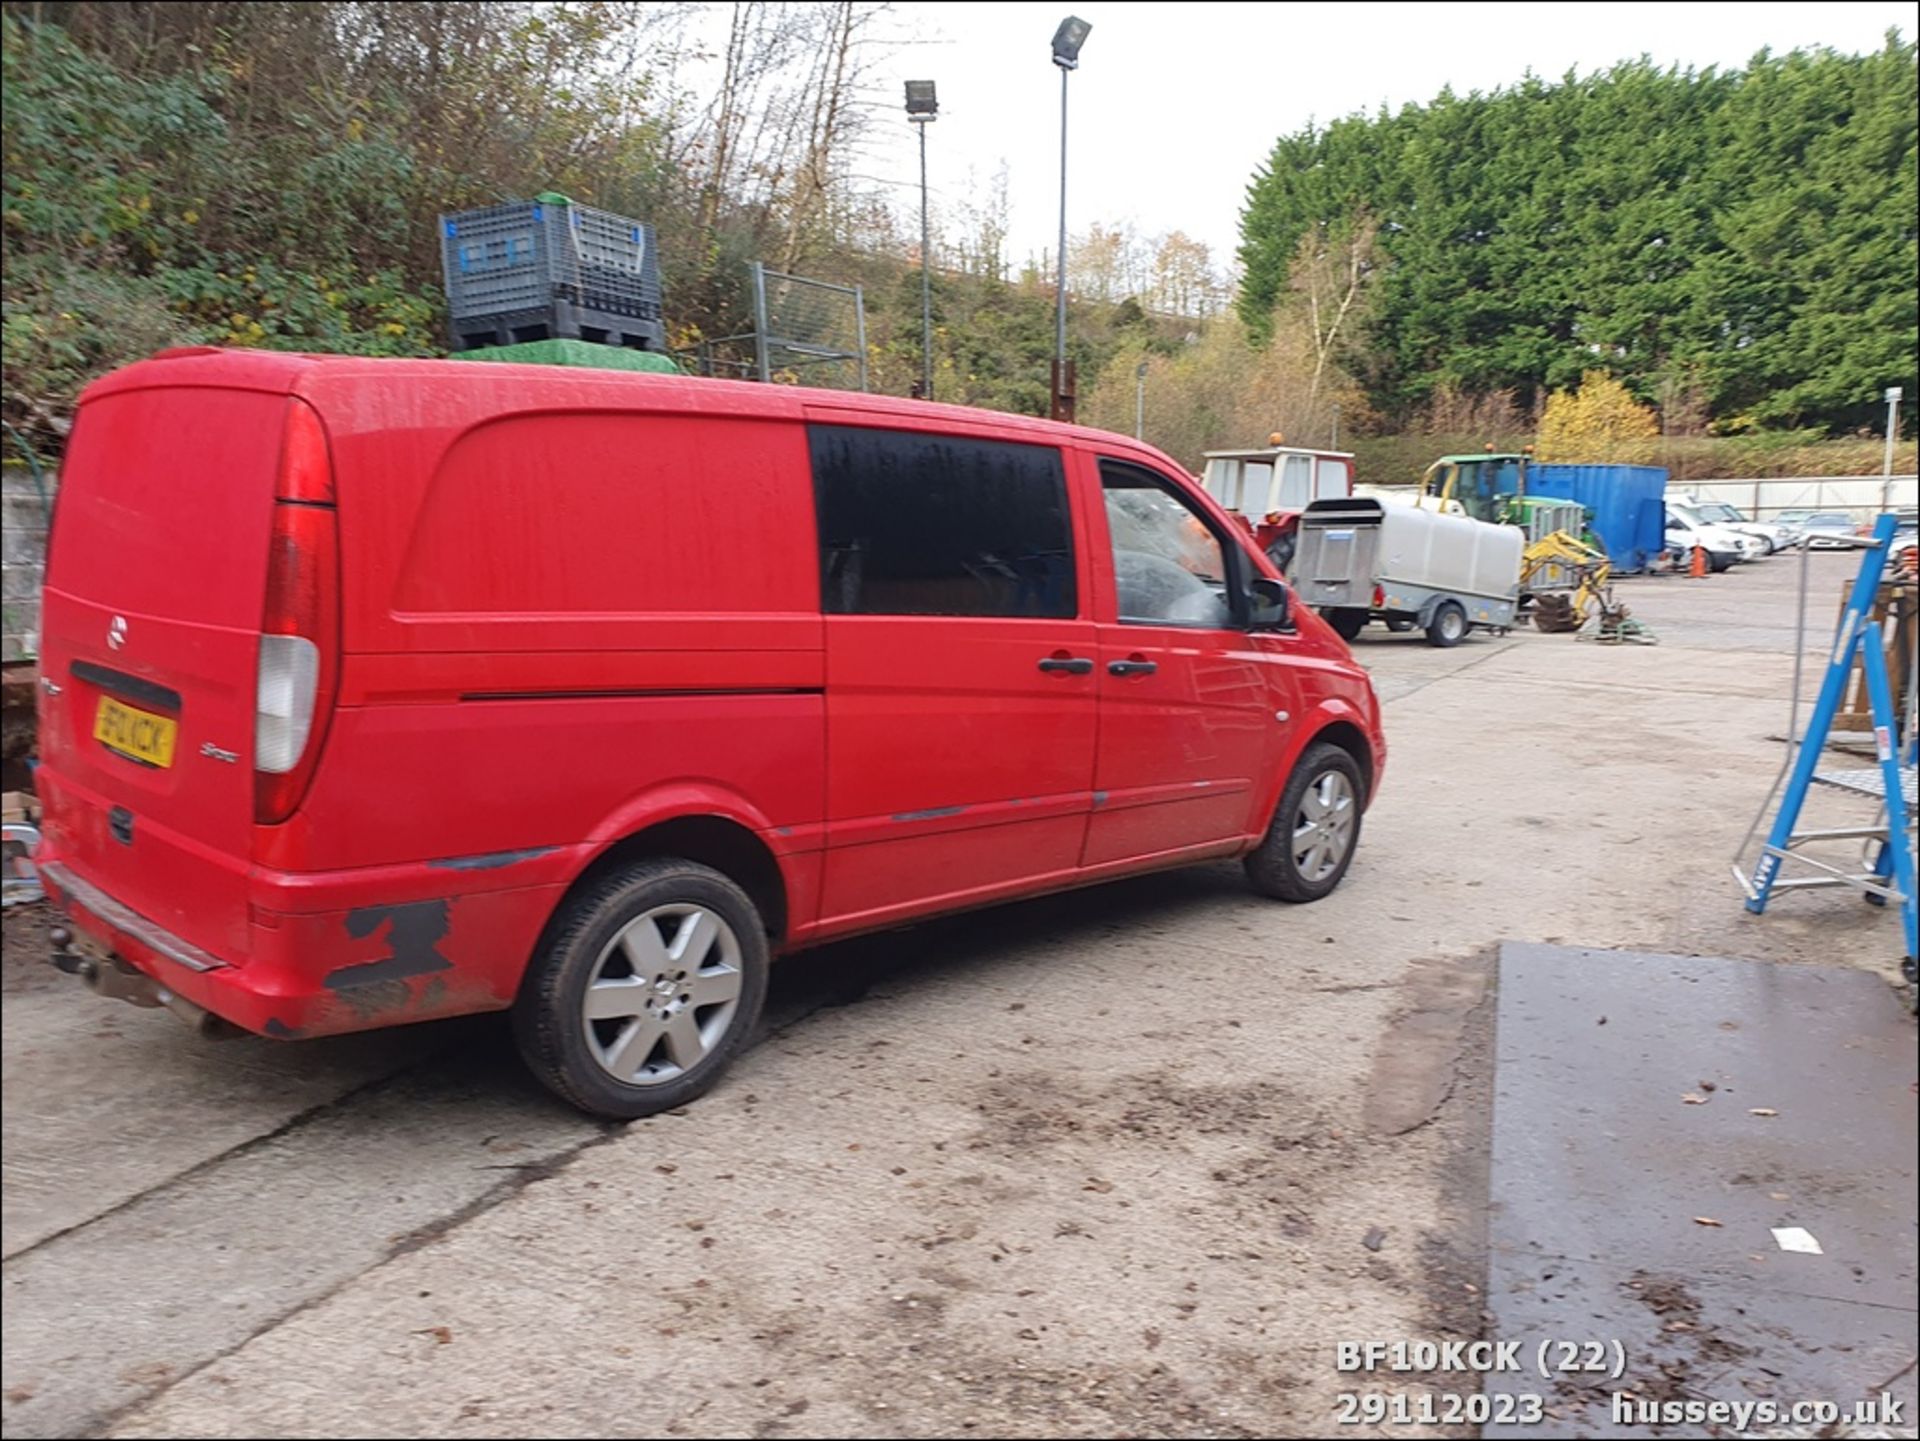 10/10 MERCEDES VITO 111 CDI LONG - 2148cc Van (Red) - Image 23 of 56